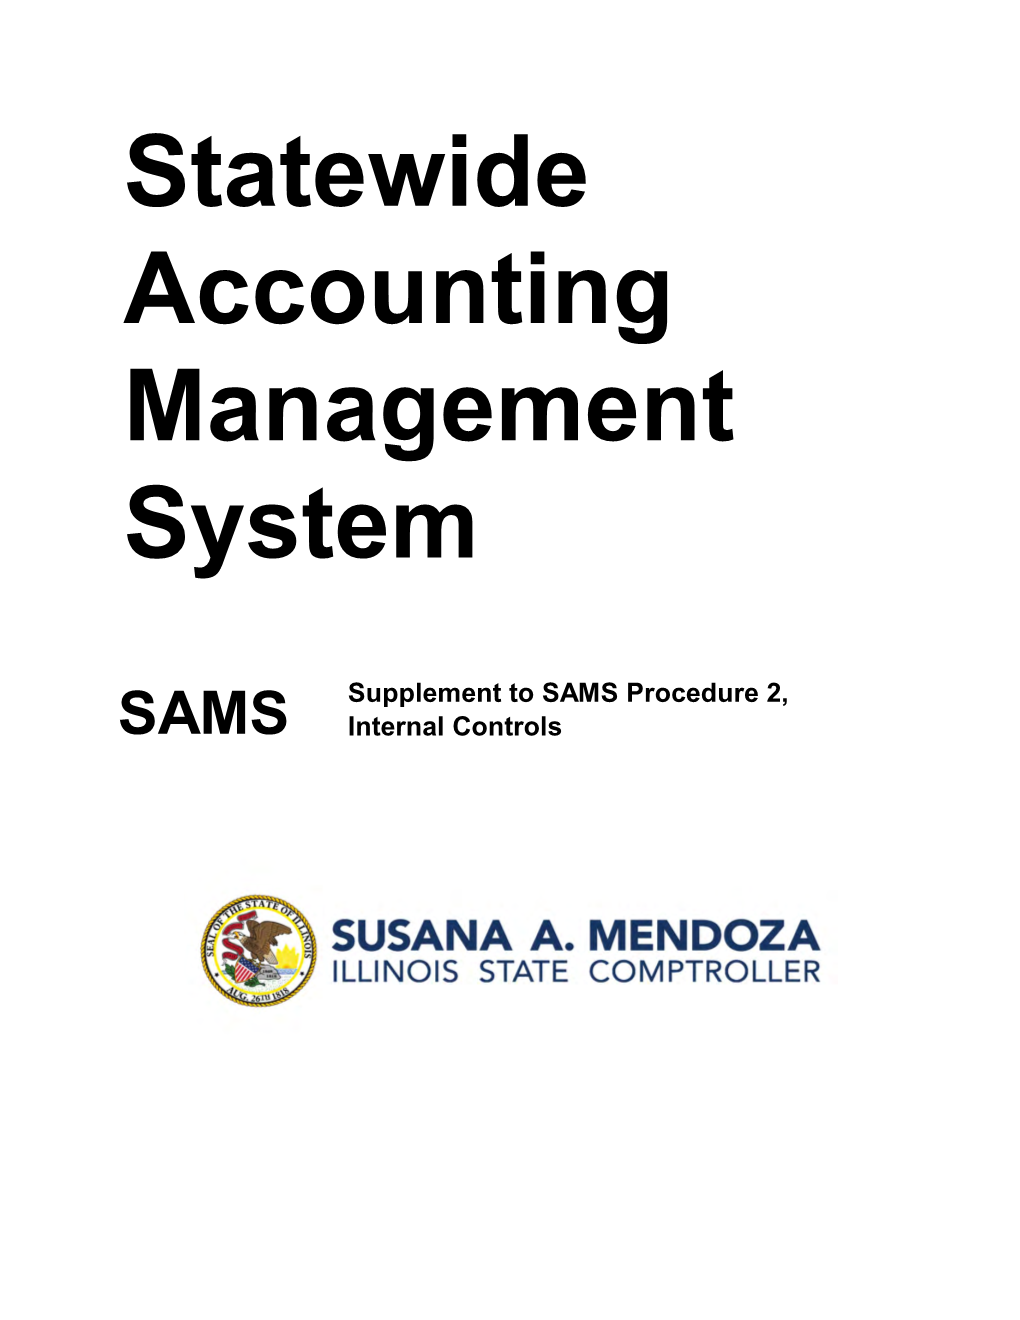 Supplement to SAMS Procedure 2, Internal Controls